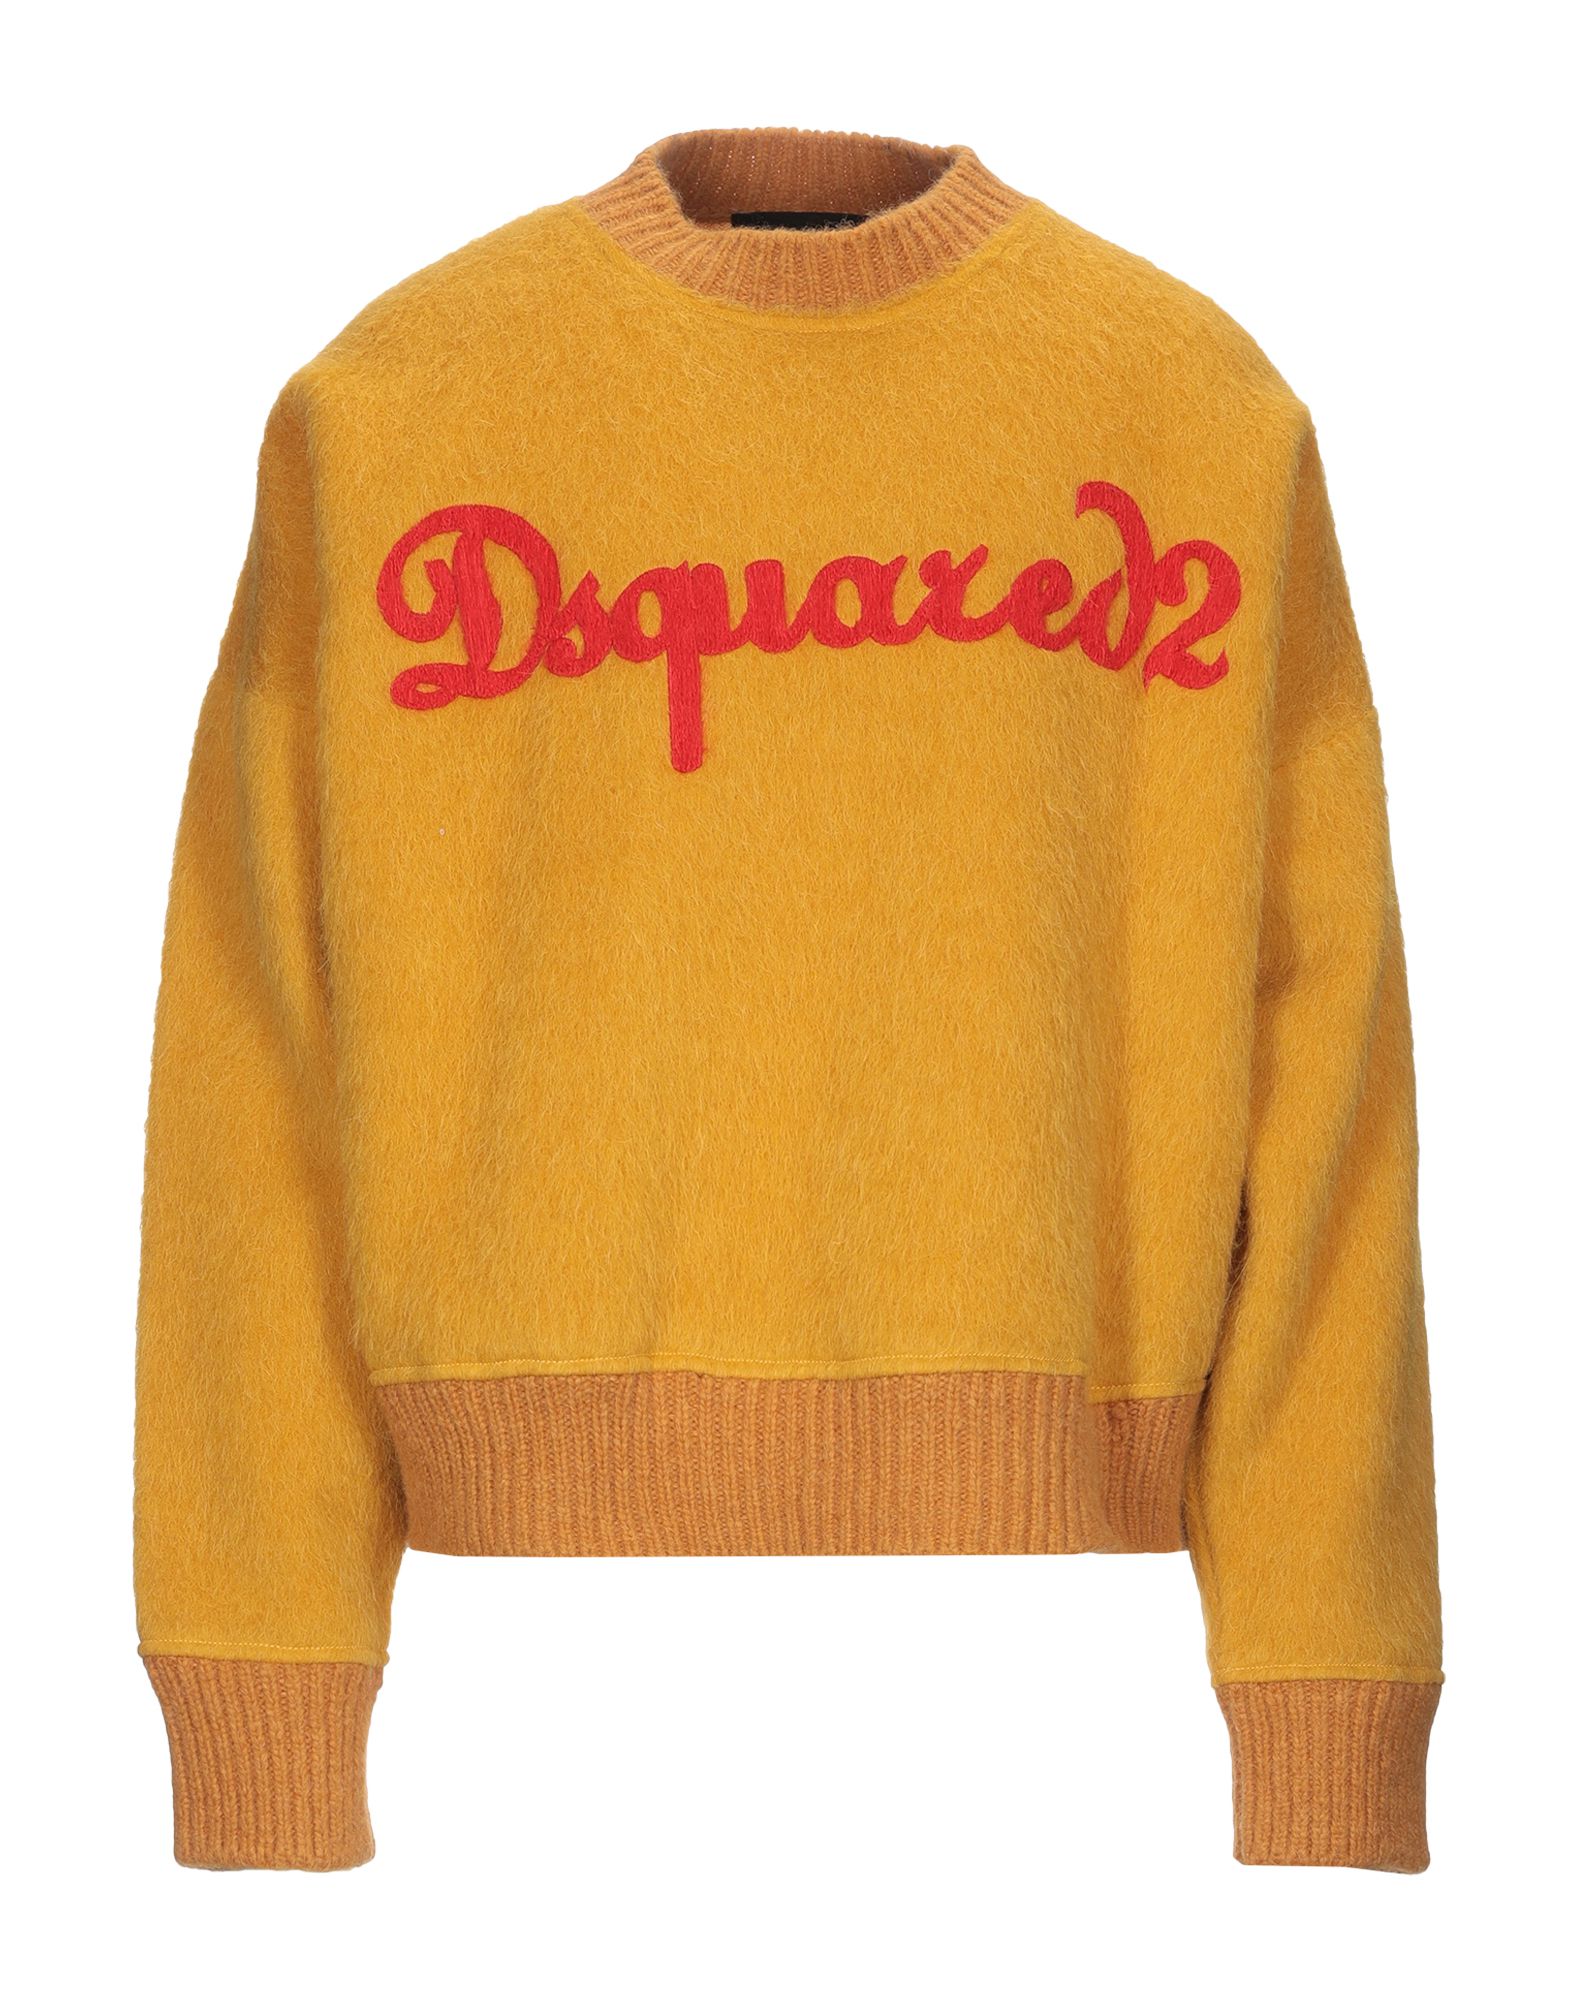 DSQUARED2 Sweatshirts - Item 12471097